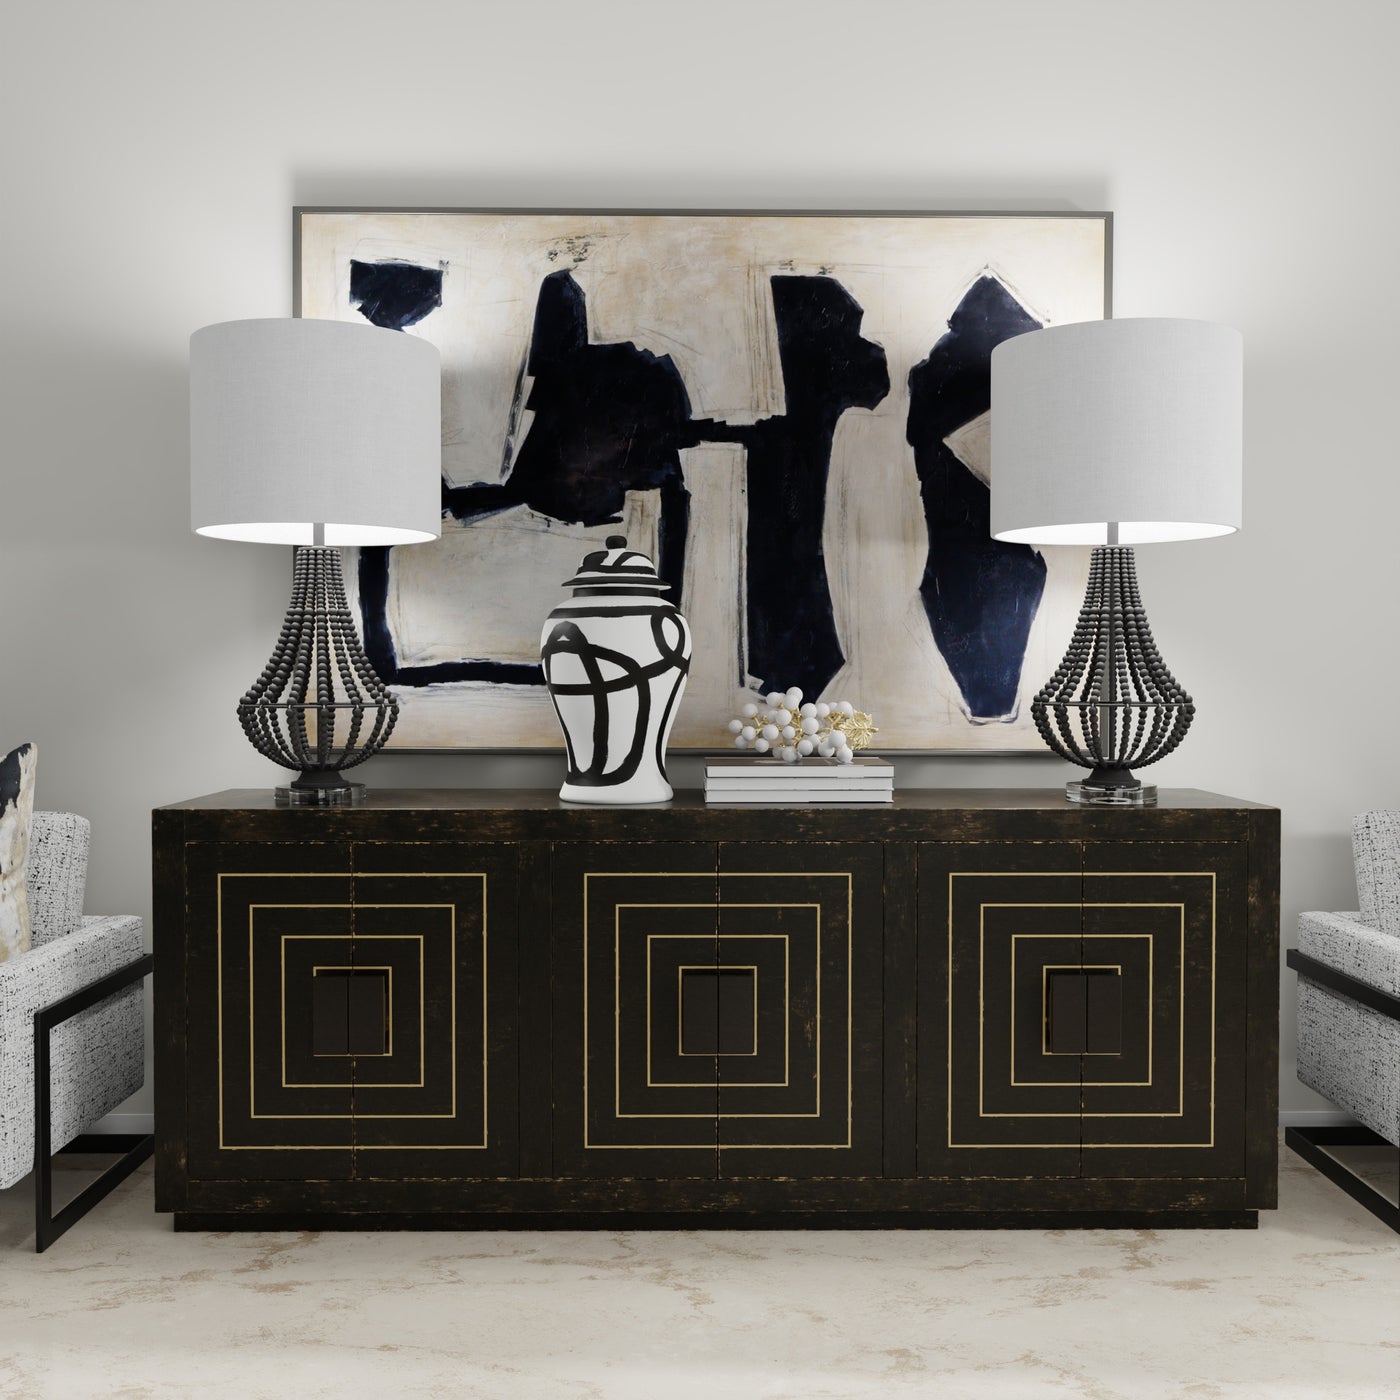 Aurora – Large Eclipse Table Lamp by Hasik Design Studio